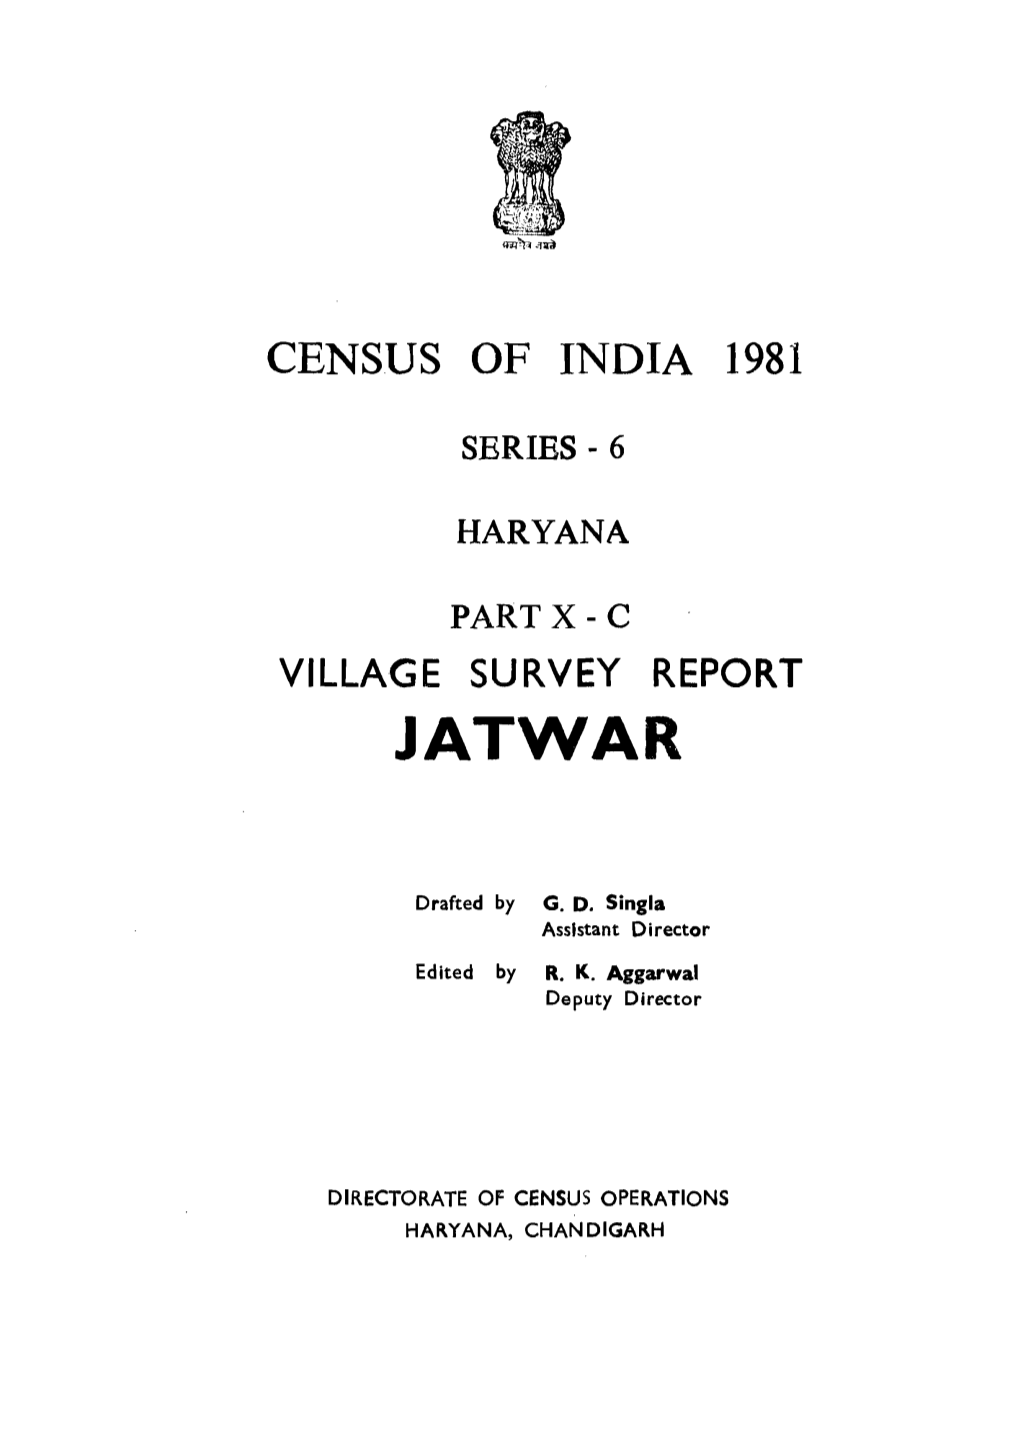 Village Survey Report Jatwar, Part X-C, Series-6, Haryana